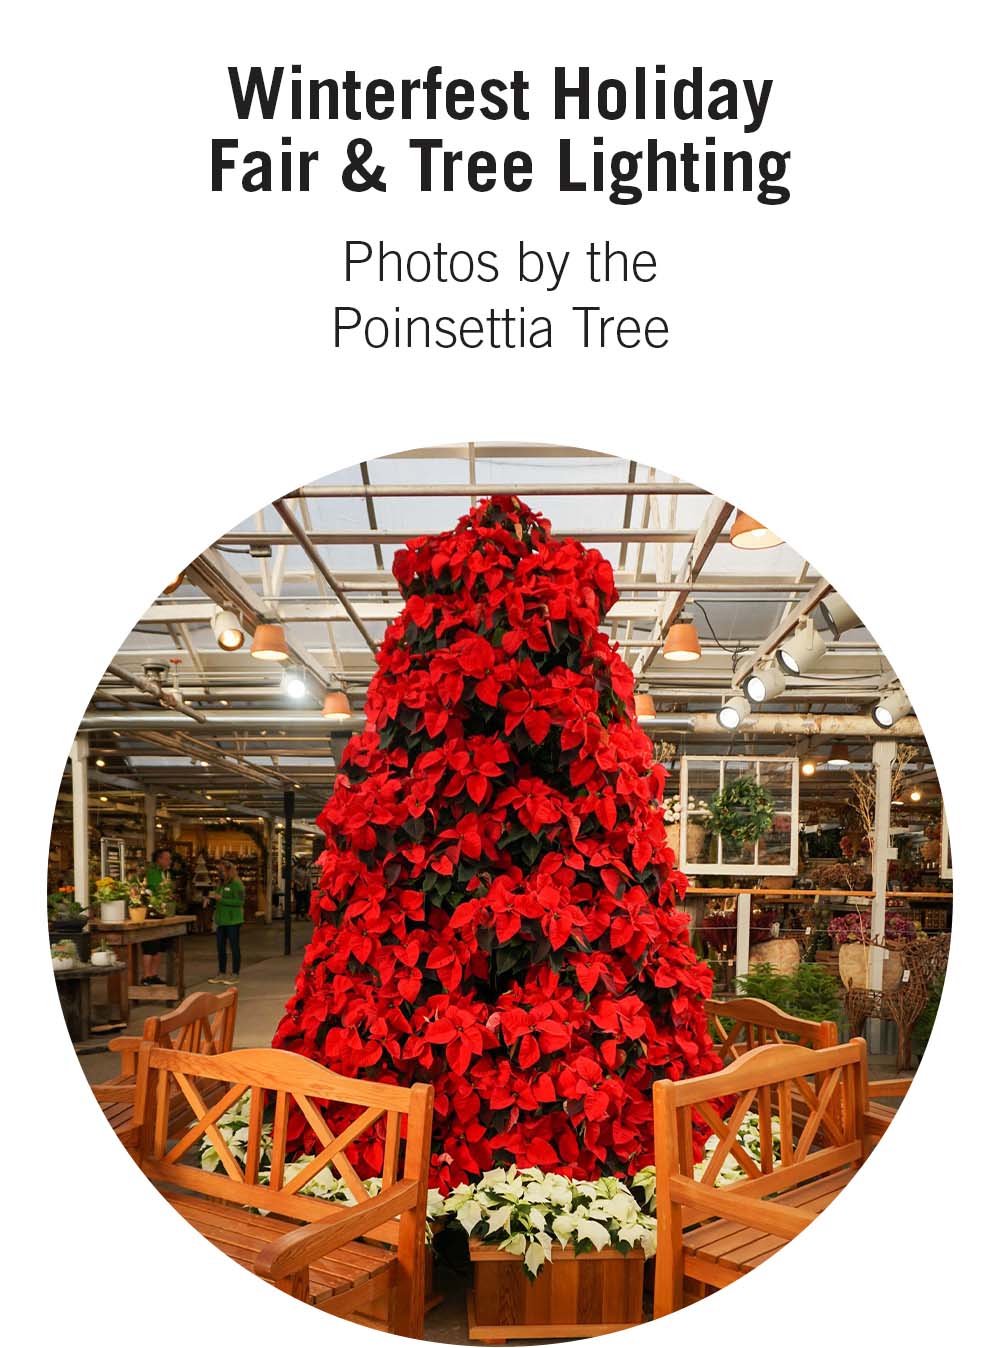 Winterfest Holiday Fair & Tree Lighting Photos by the Poinsettia Tree